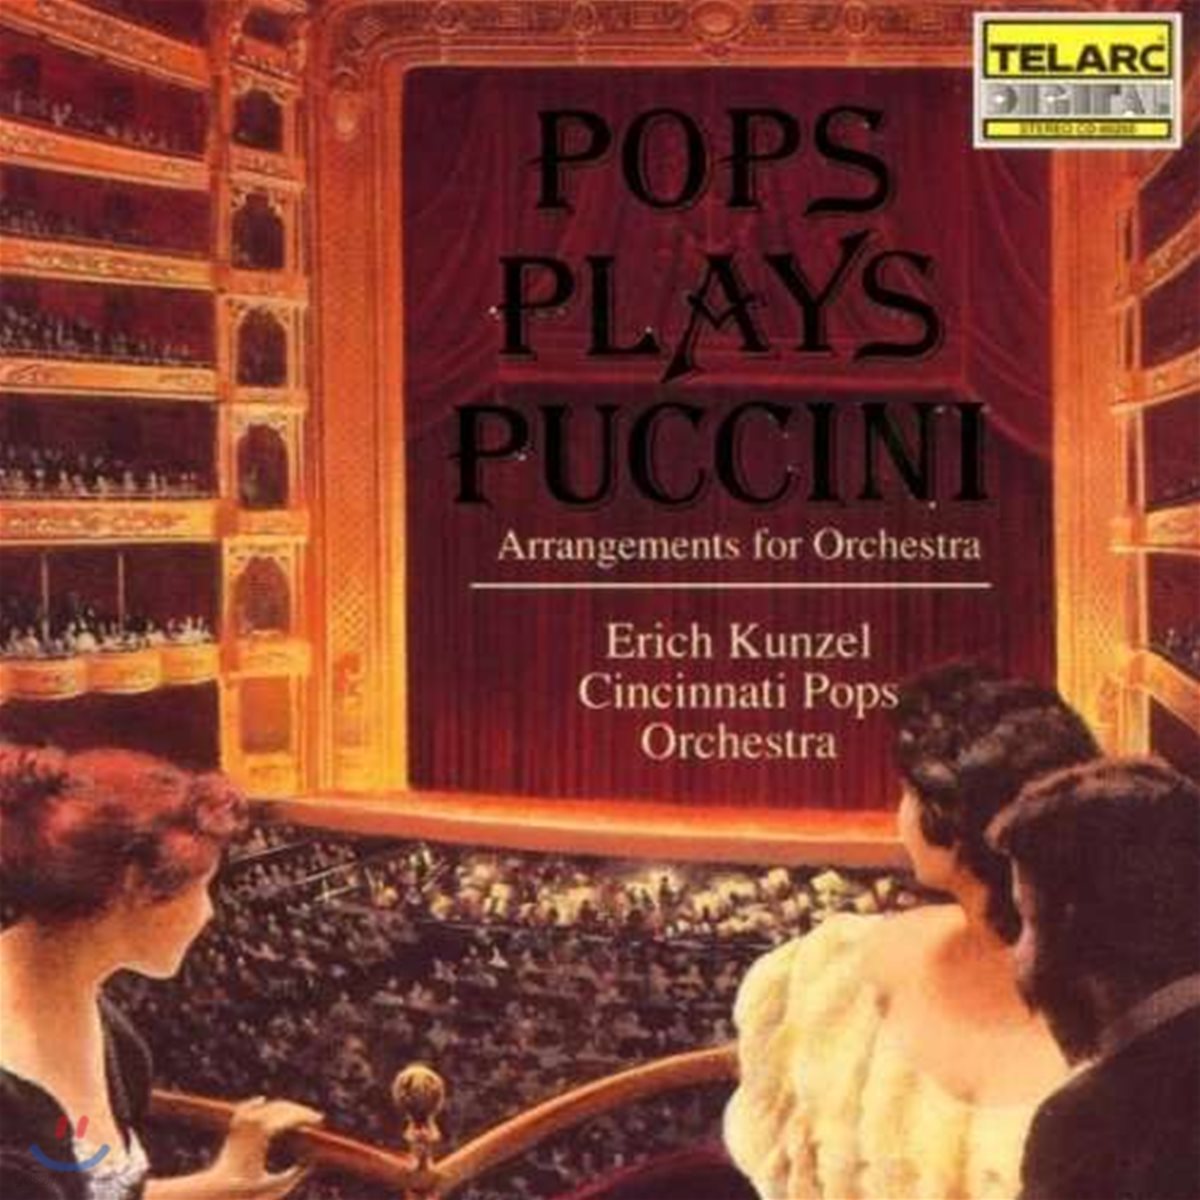 Erich Kunzel 신시내티 팝스가 연주하는 푸치니 [관현악 편곡 연주] (Cincinnati Pops Plays Puccini)